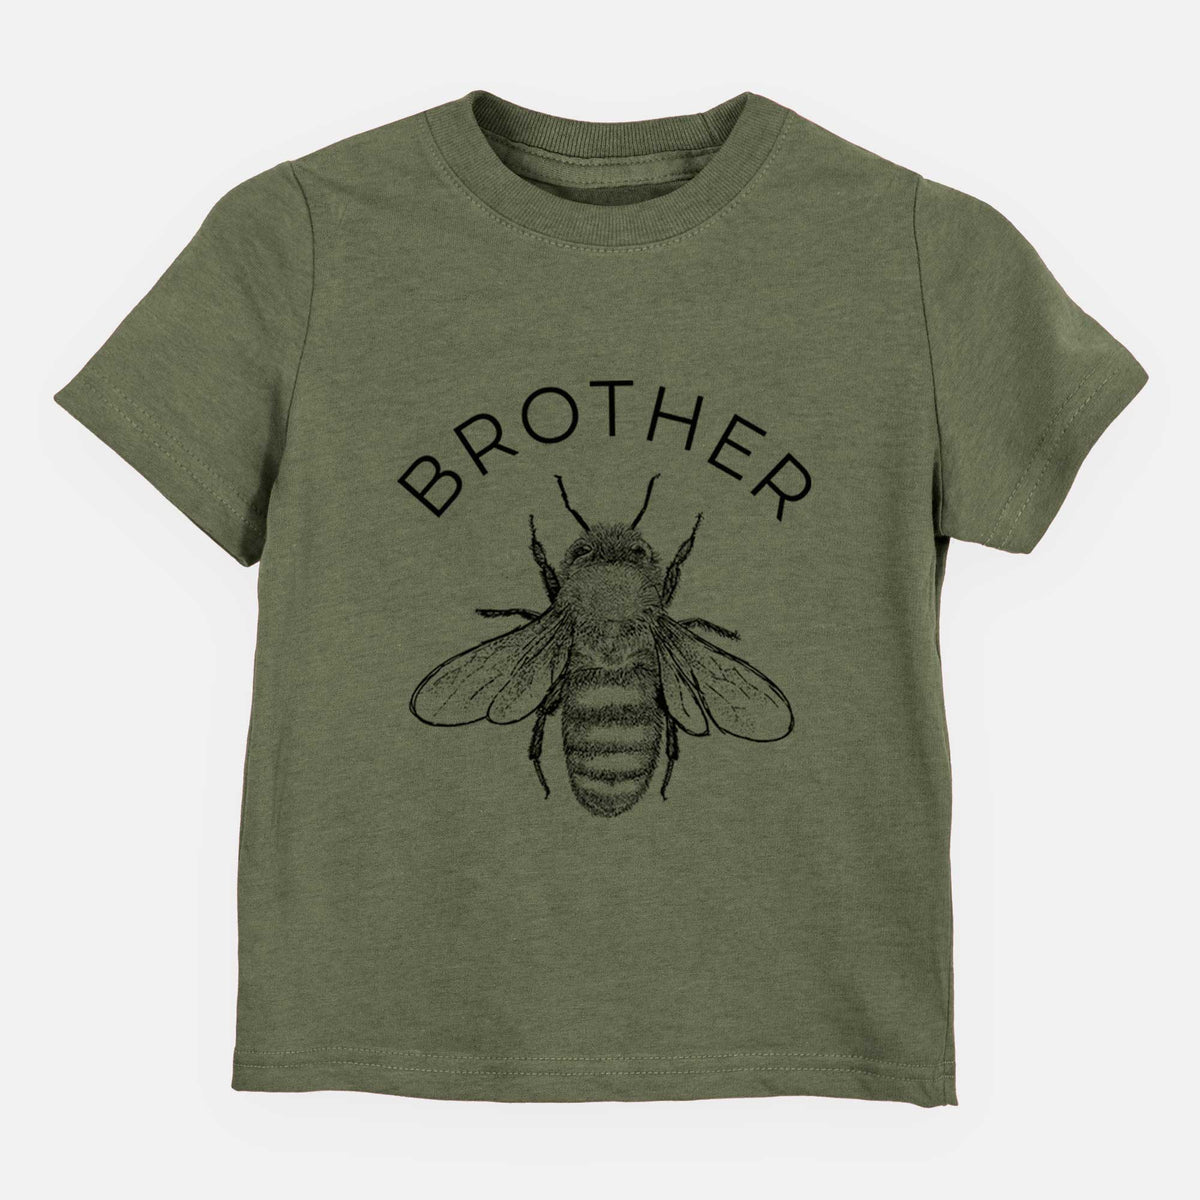 Brother Bee - Kids Shirt